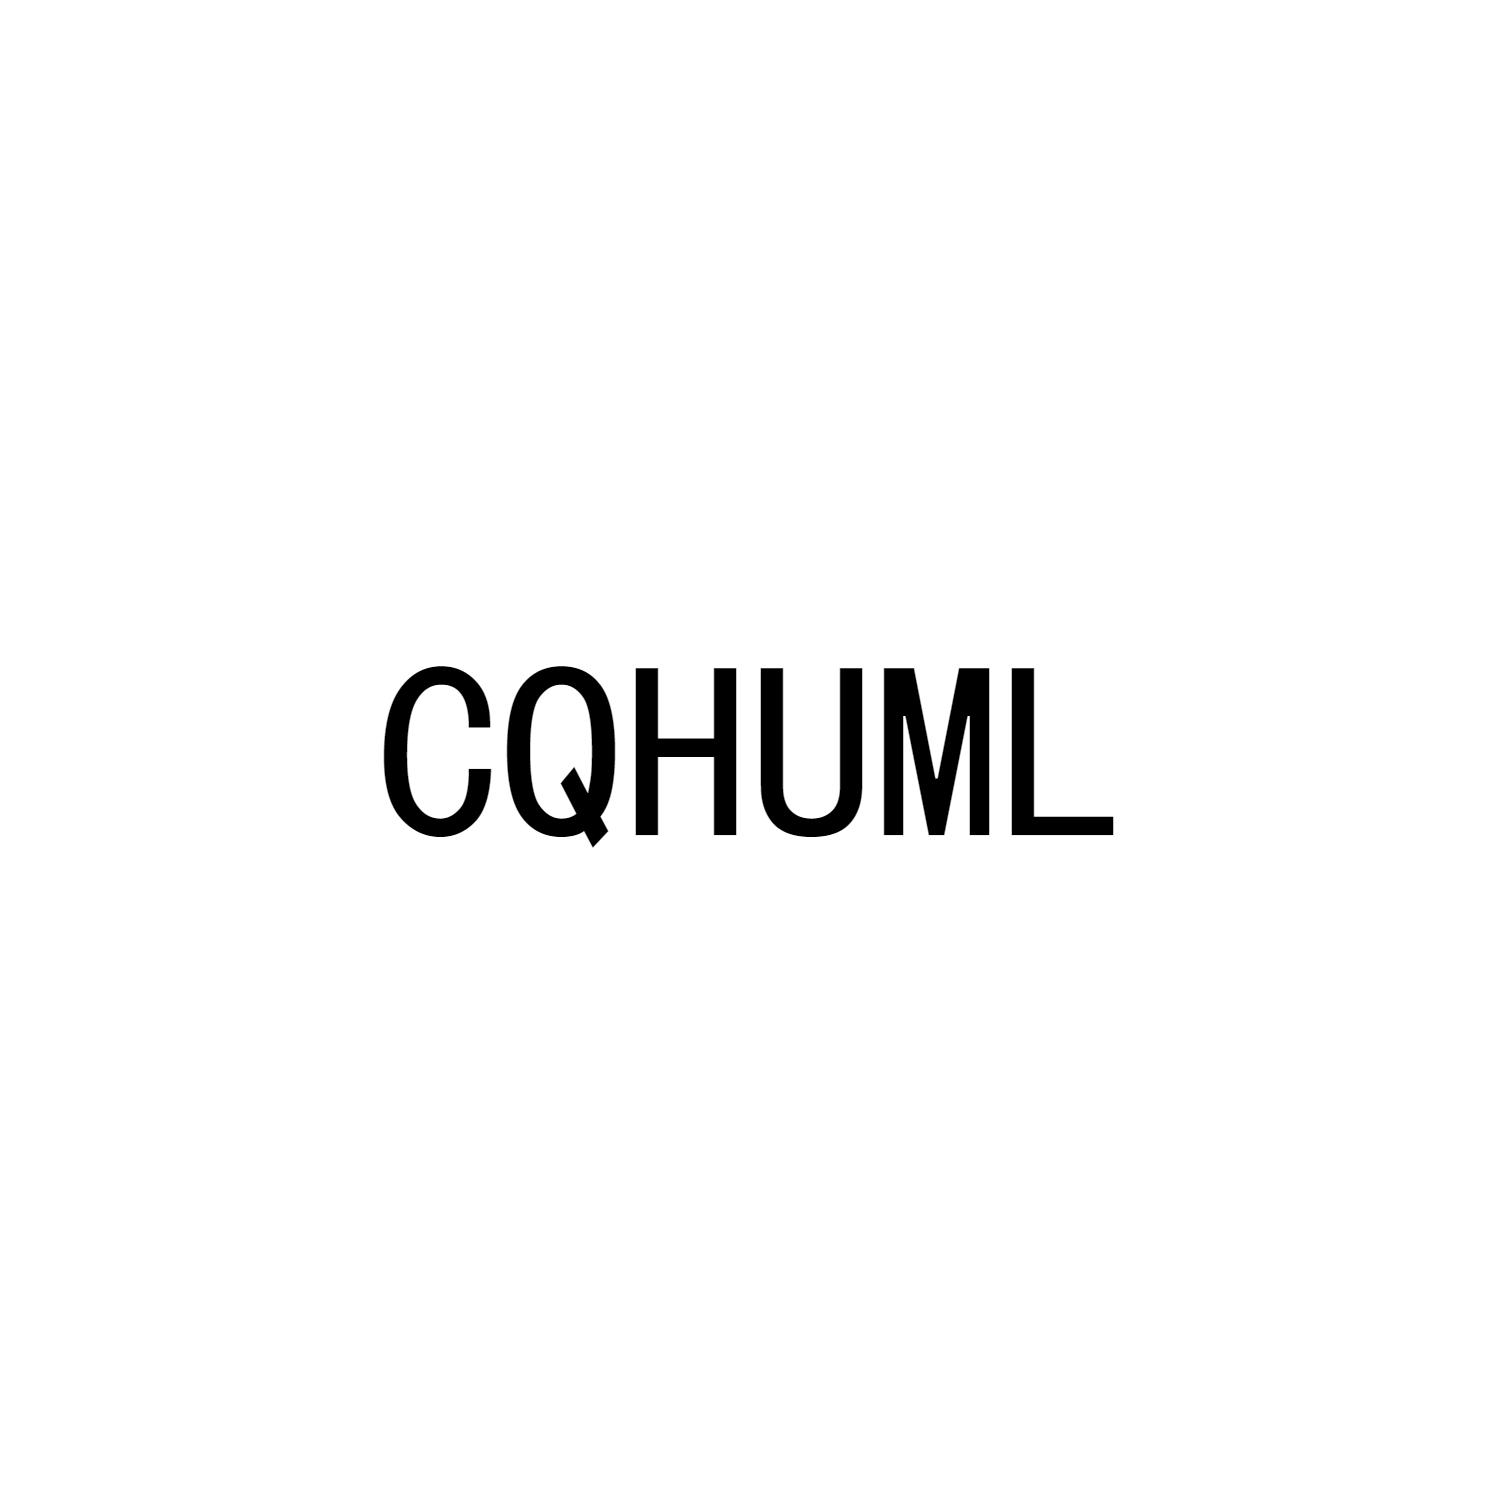 CQHUML